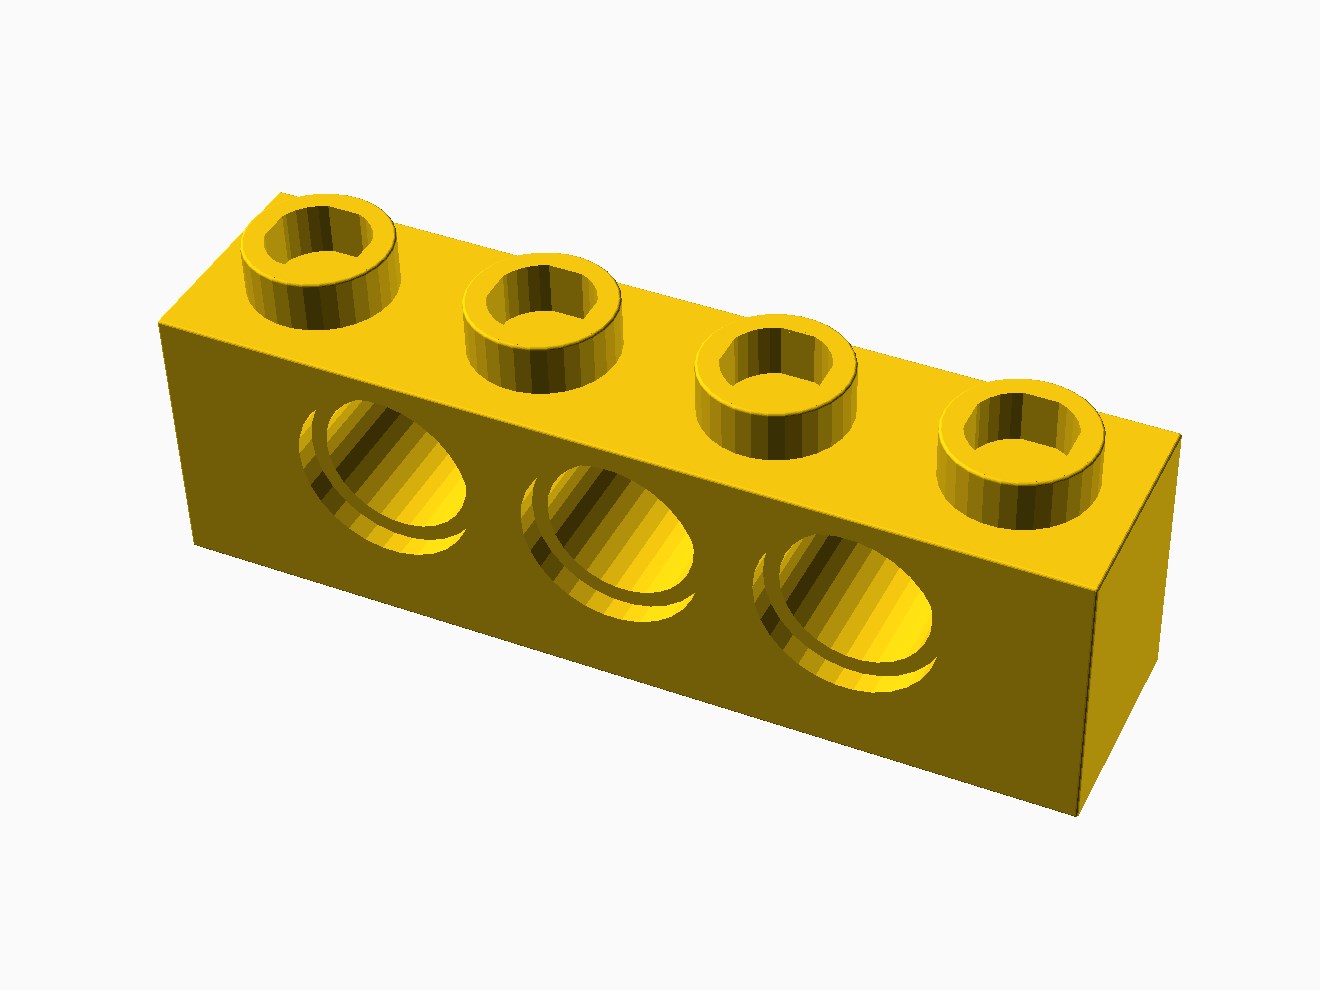 3D printable model of a LEGO Technic 4x1 Brick.